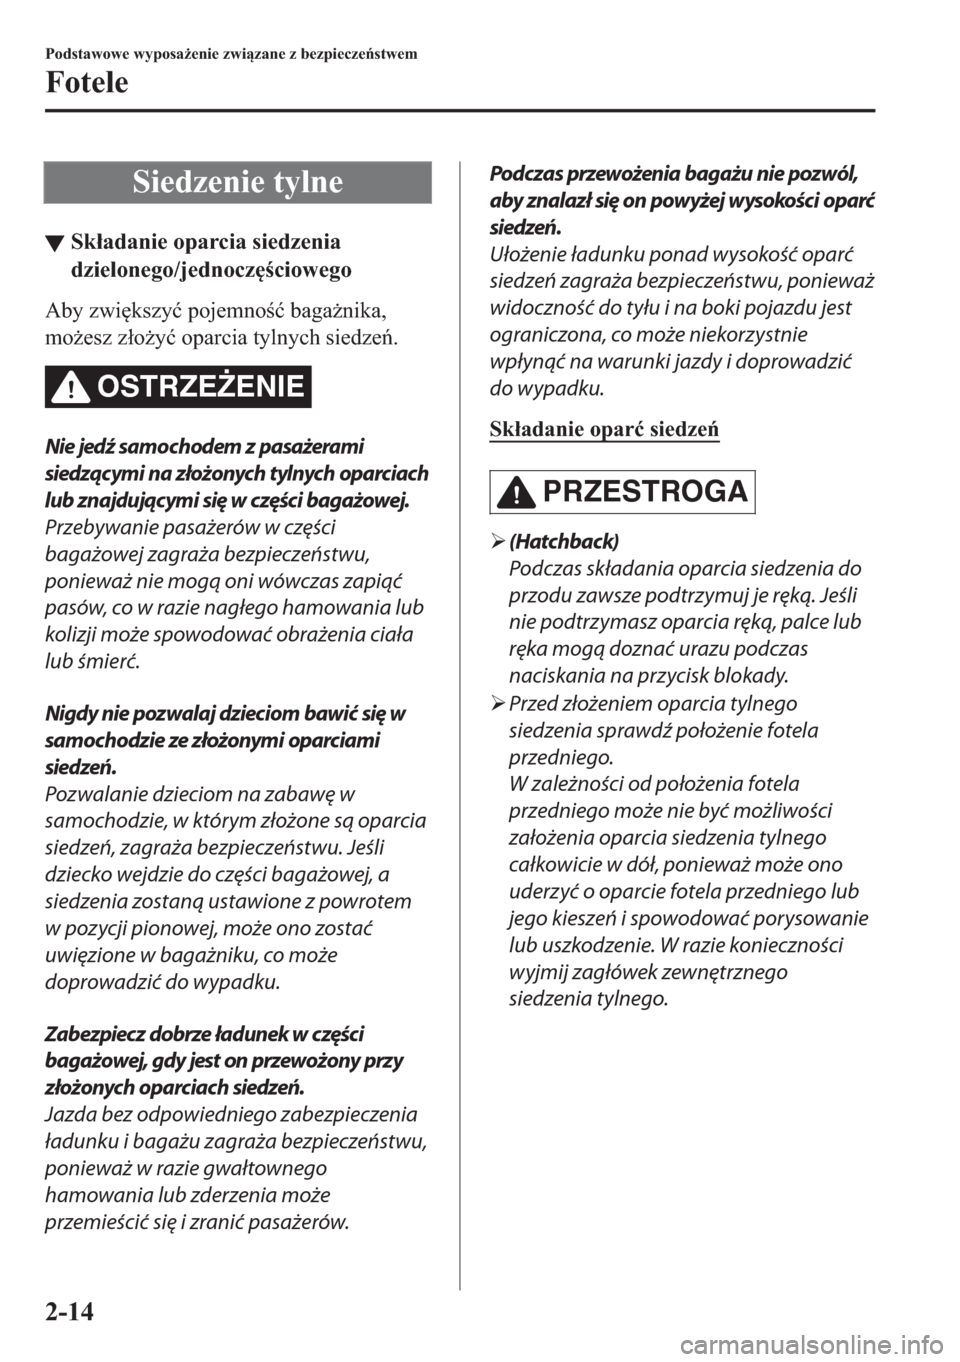 MAZDA MODEL 2 2019  Instrukcja Obsługi (in Polish) �6�L�H�G�]�H�Q�L�H��W�\�O�Q�H
▼�6�N�